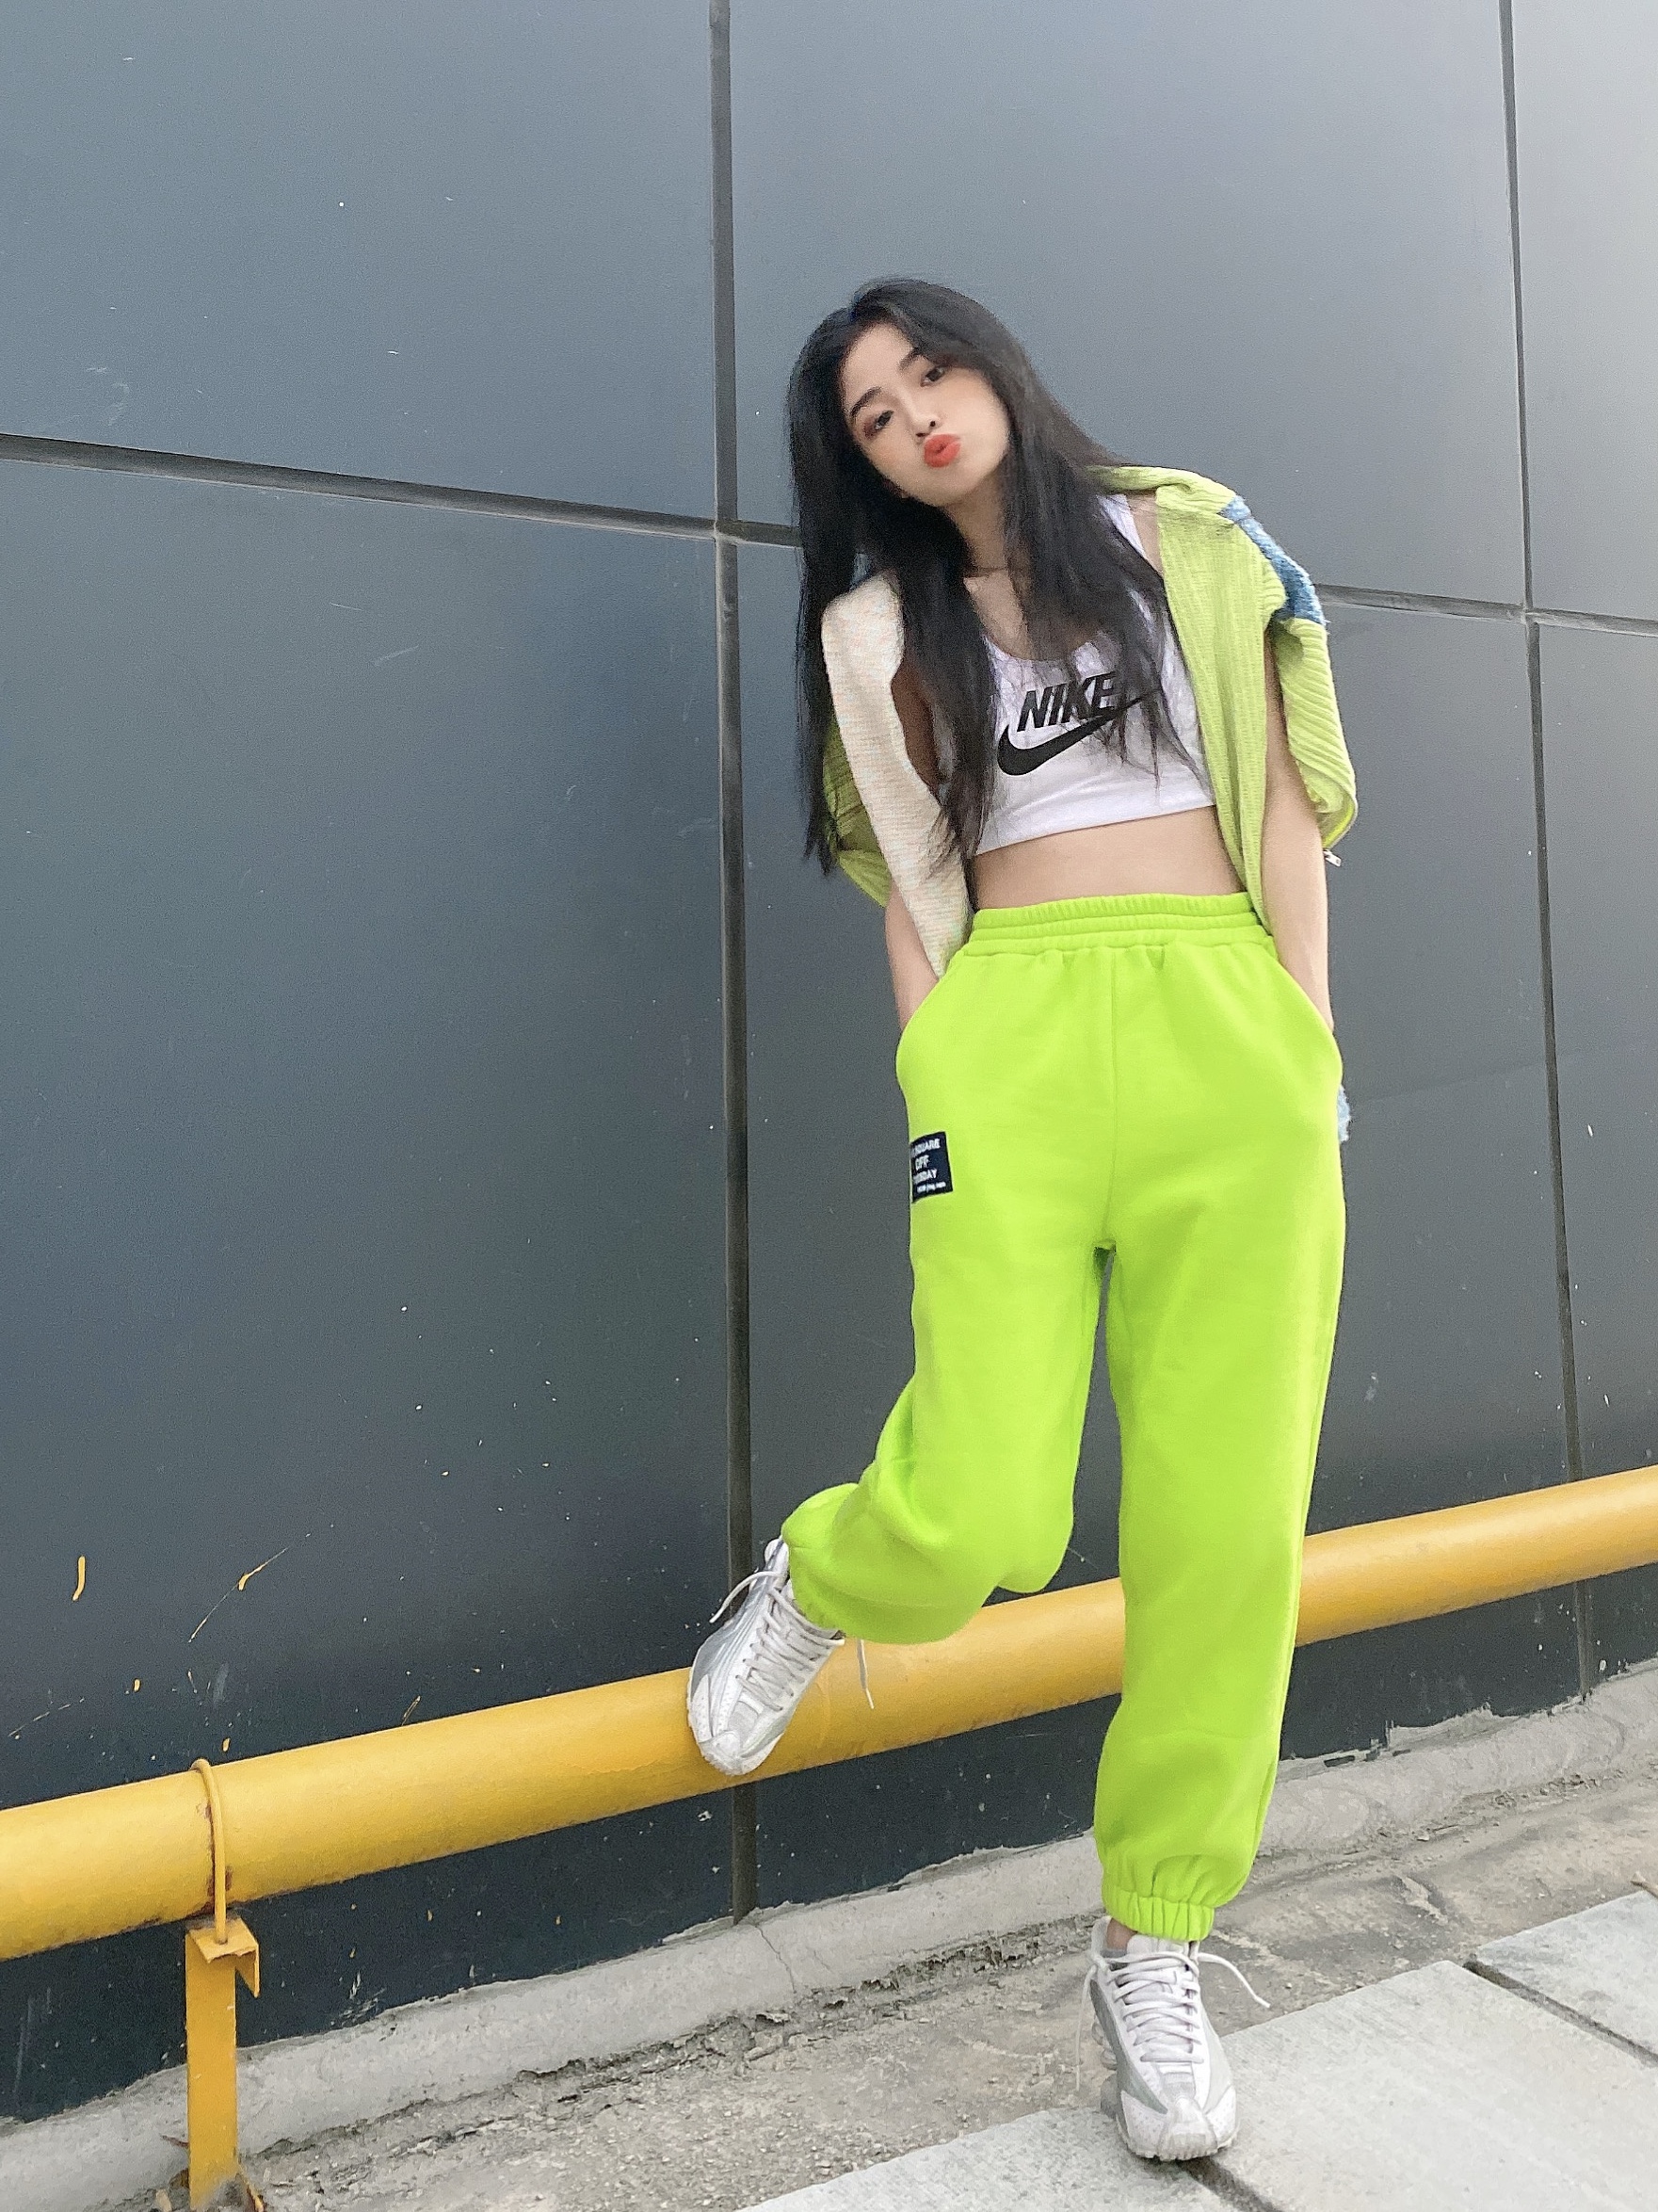 Buy Women Neon Green Scuba Side Mesh Track Pants Online At Best Price   Sassafrasin